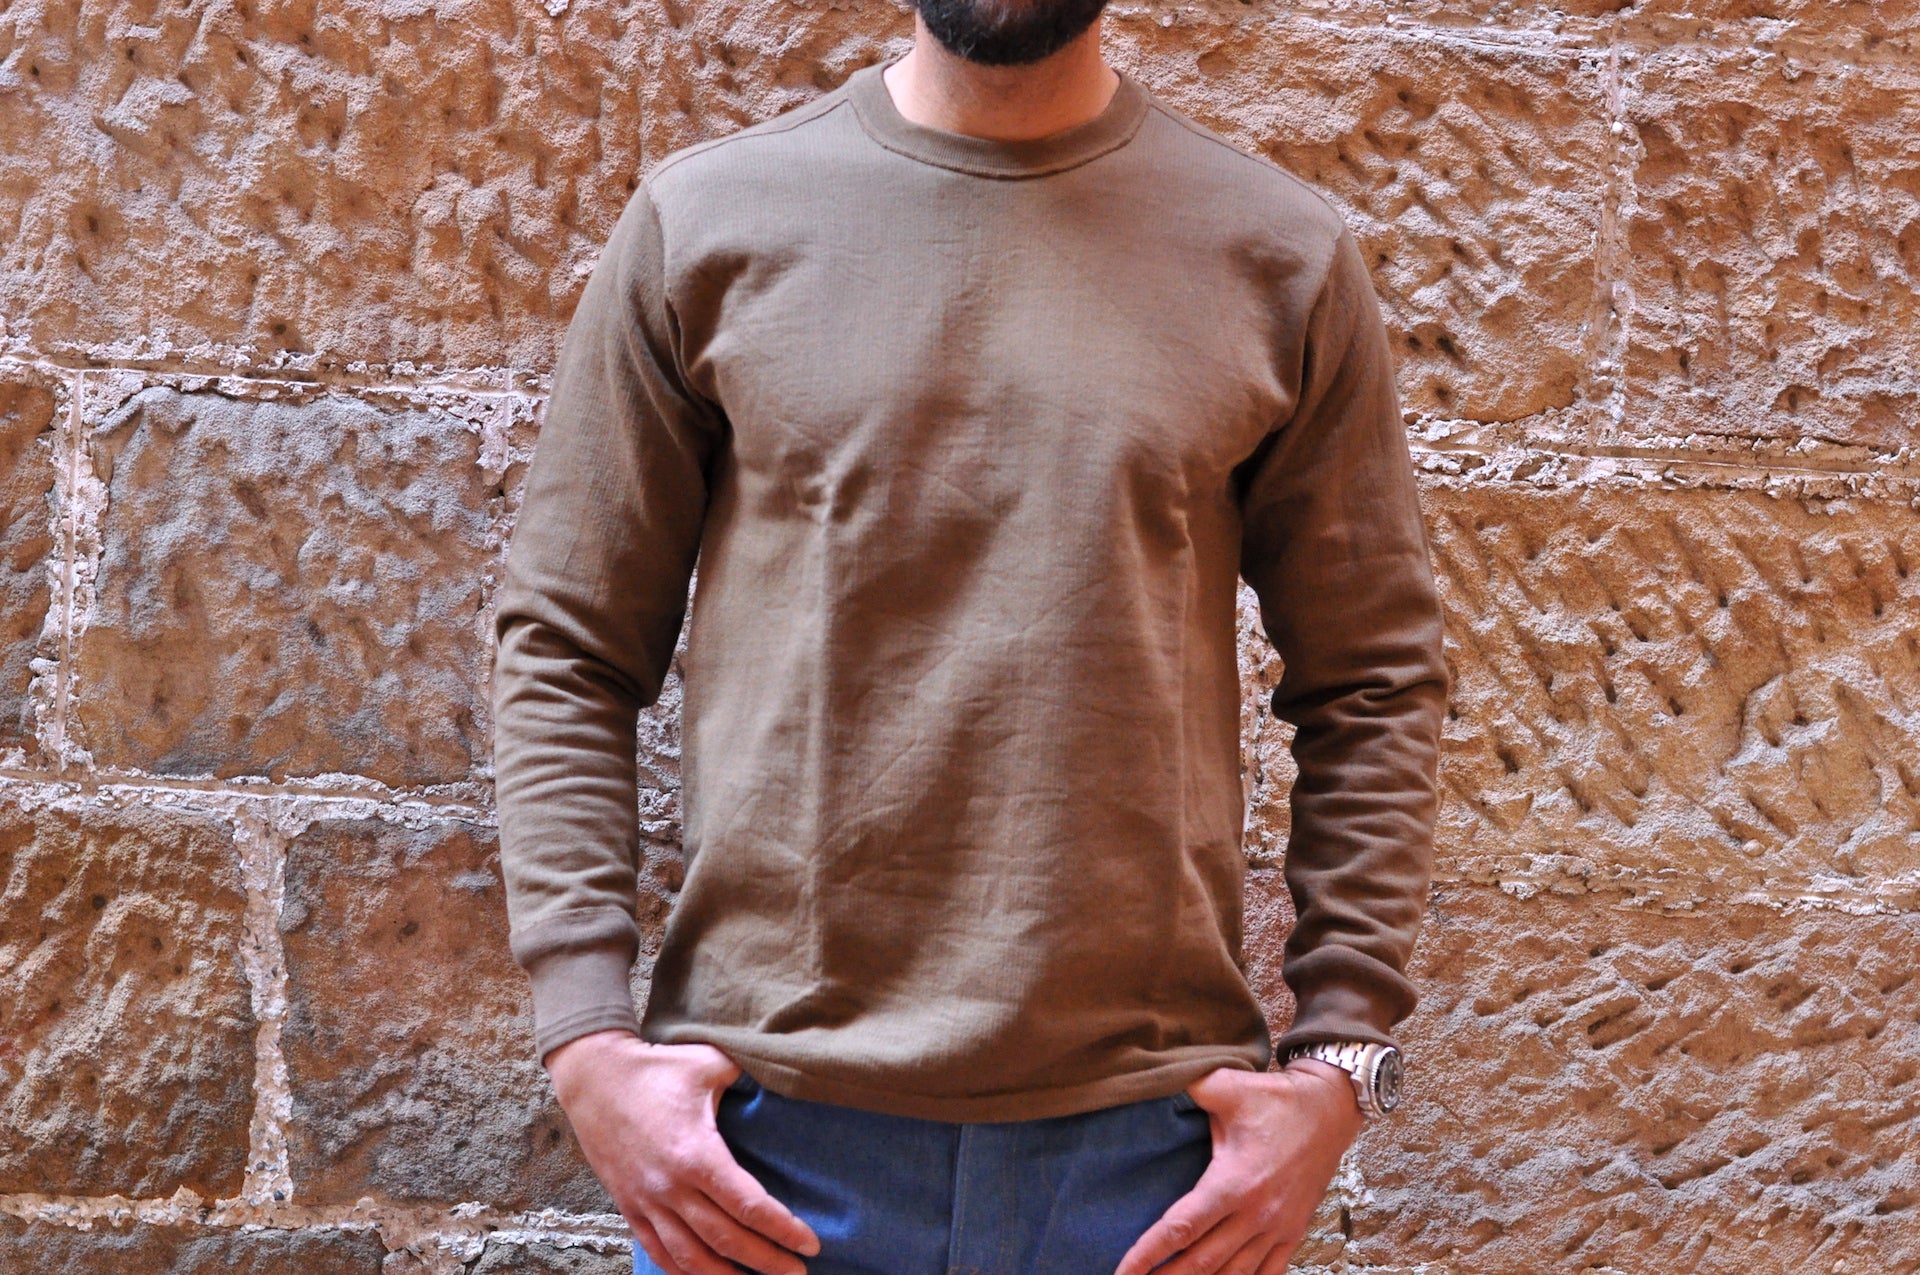 Stevenson Overall Co. Heavyweight Thermal Sweatshirt (Brown)